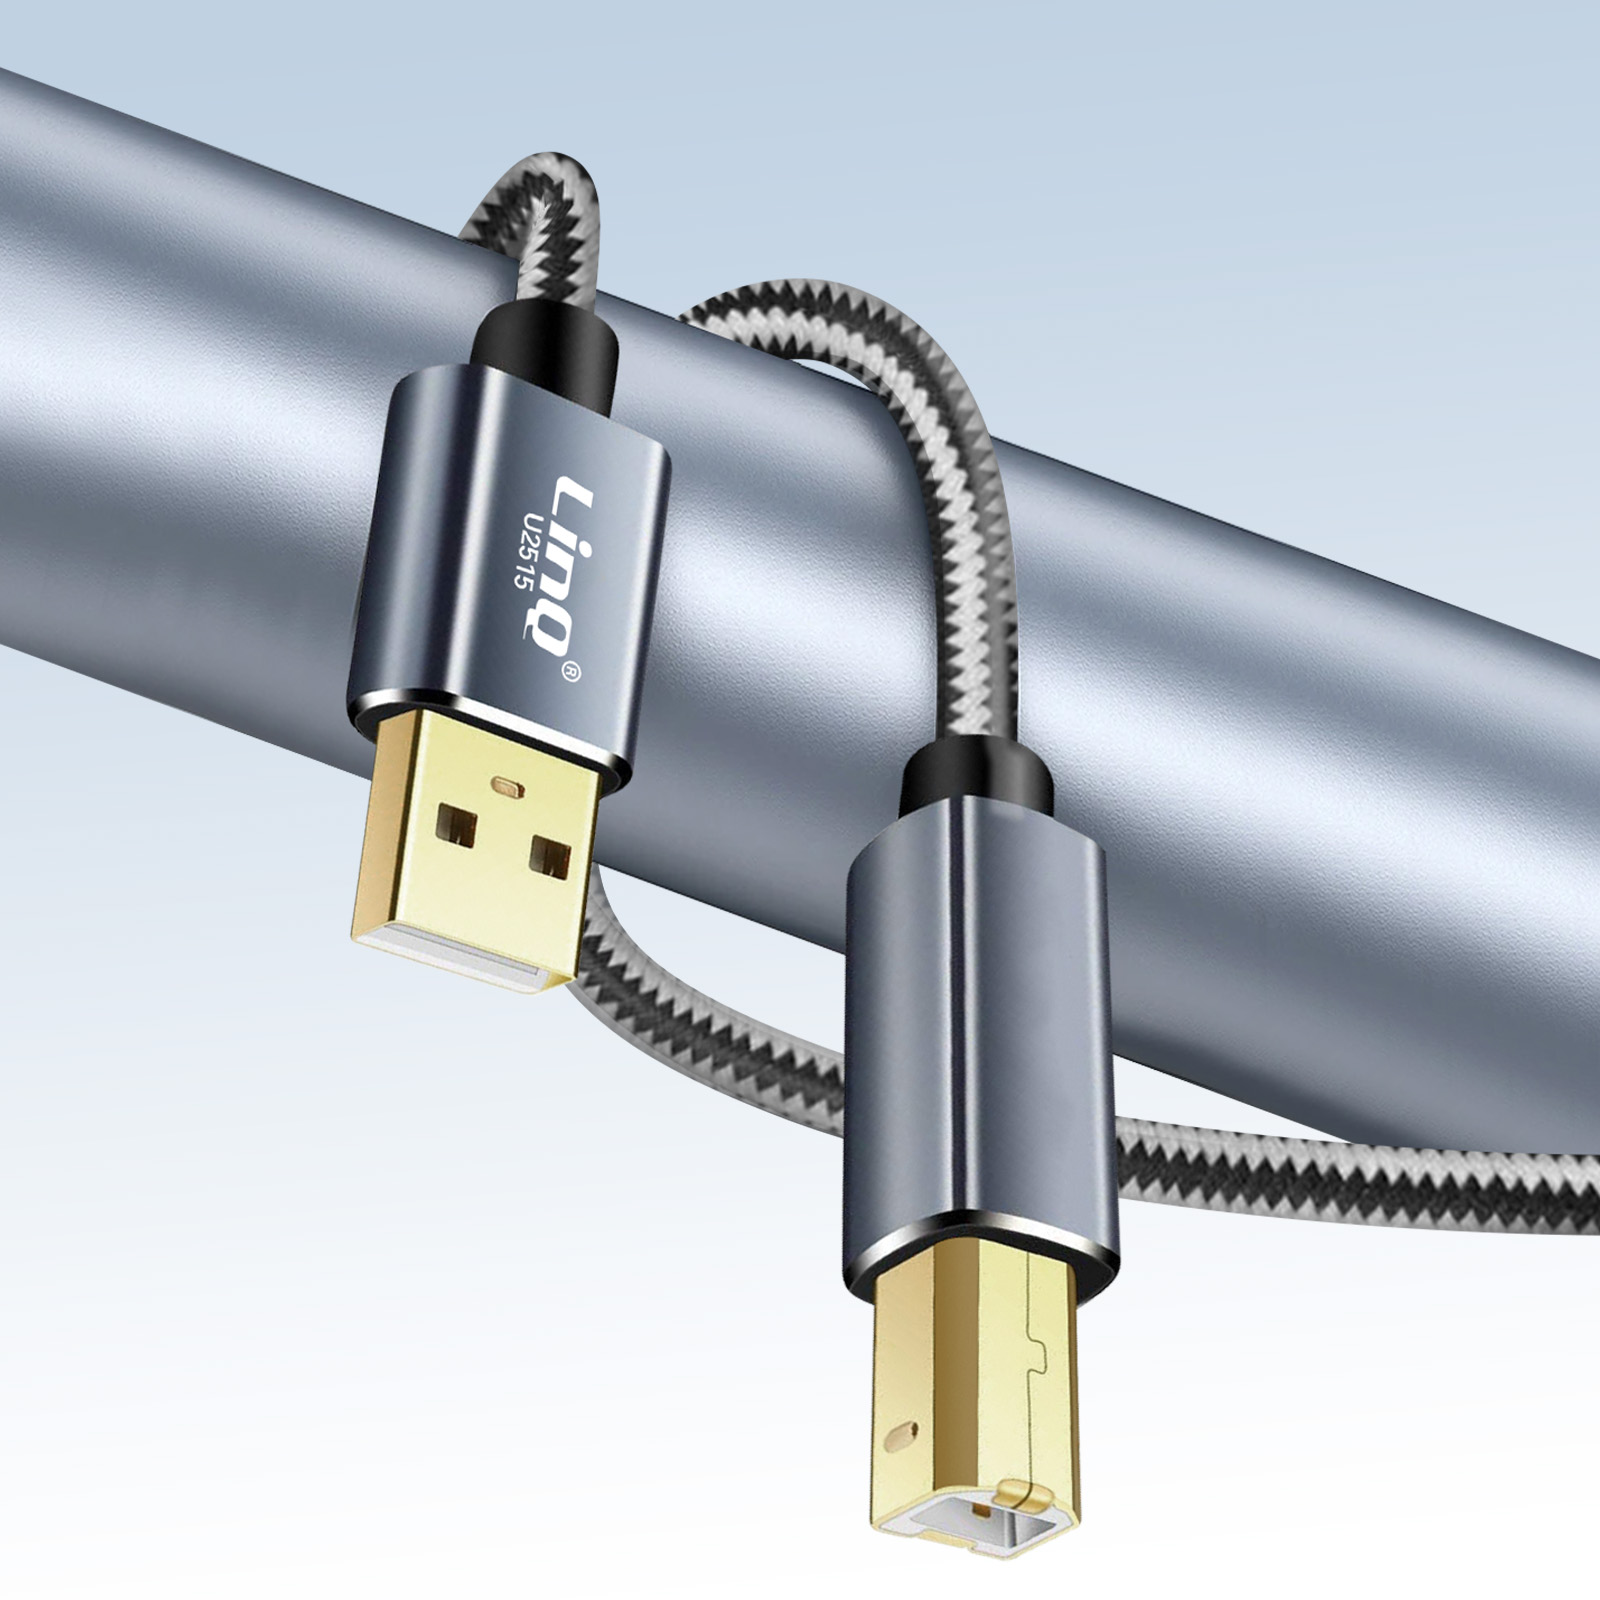 LINQ Druckerkabel m B, Druckerkabel, Nylon 1,5 USB 1.5m